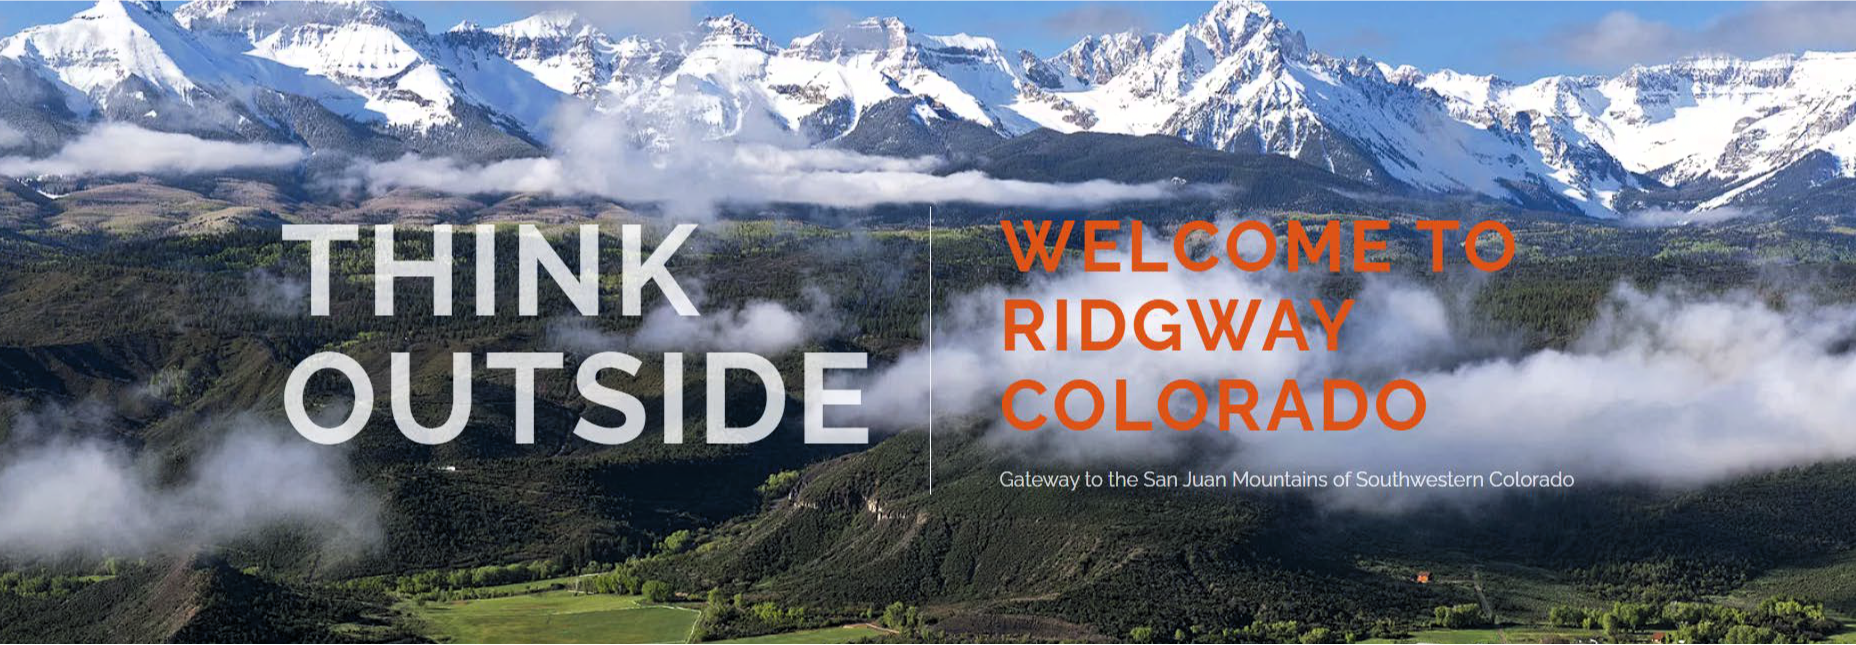 Think Outside Welcome to Ridgway Colorado Gateway to the San Juan Mountains of Southwestern Colorado Ariel View